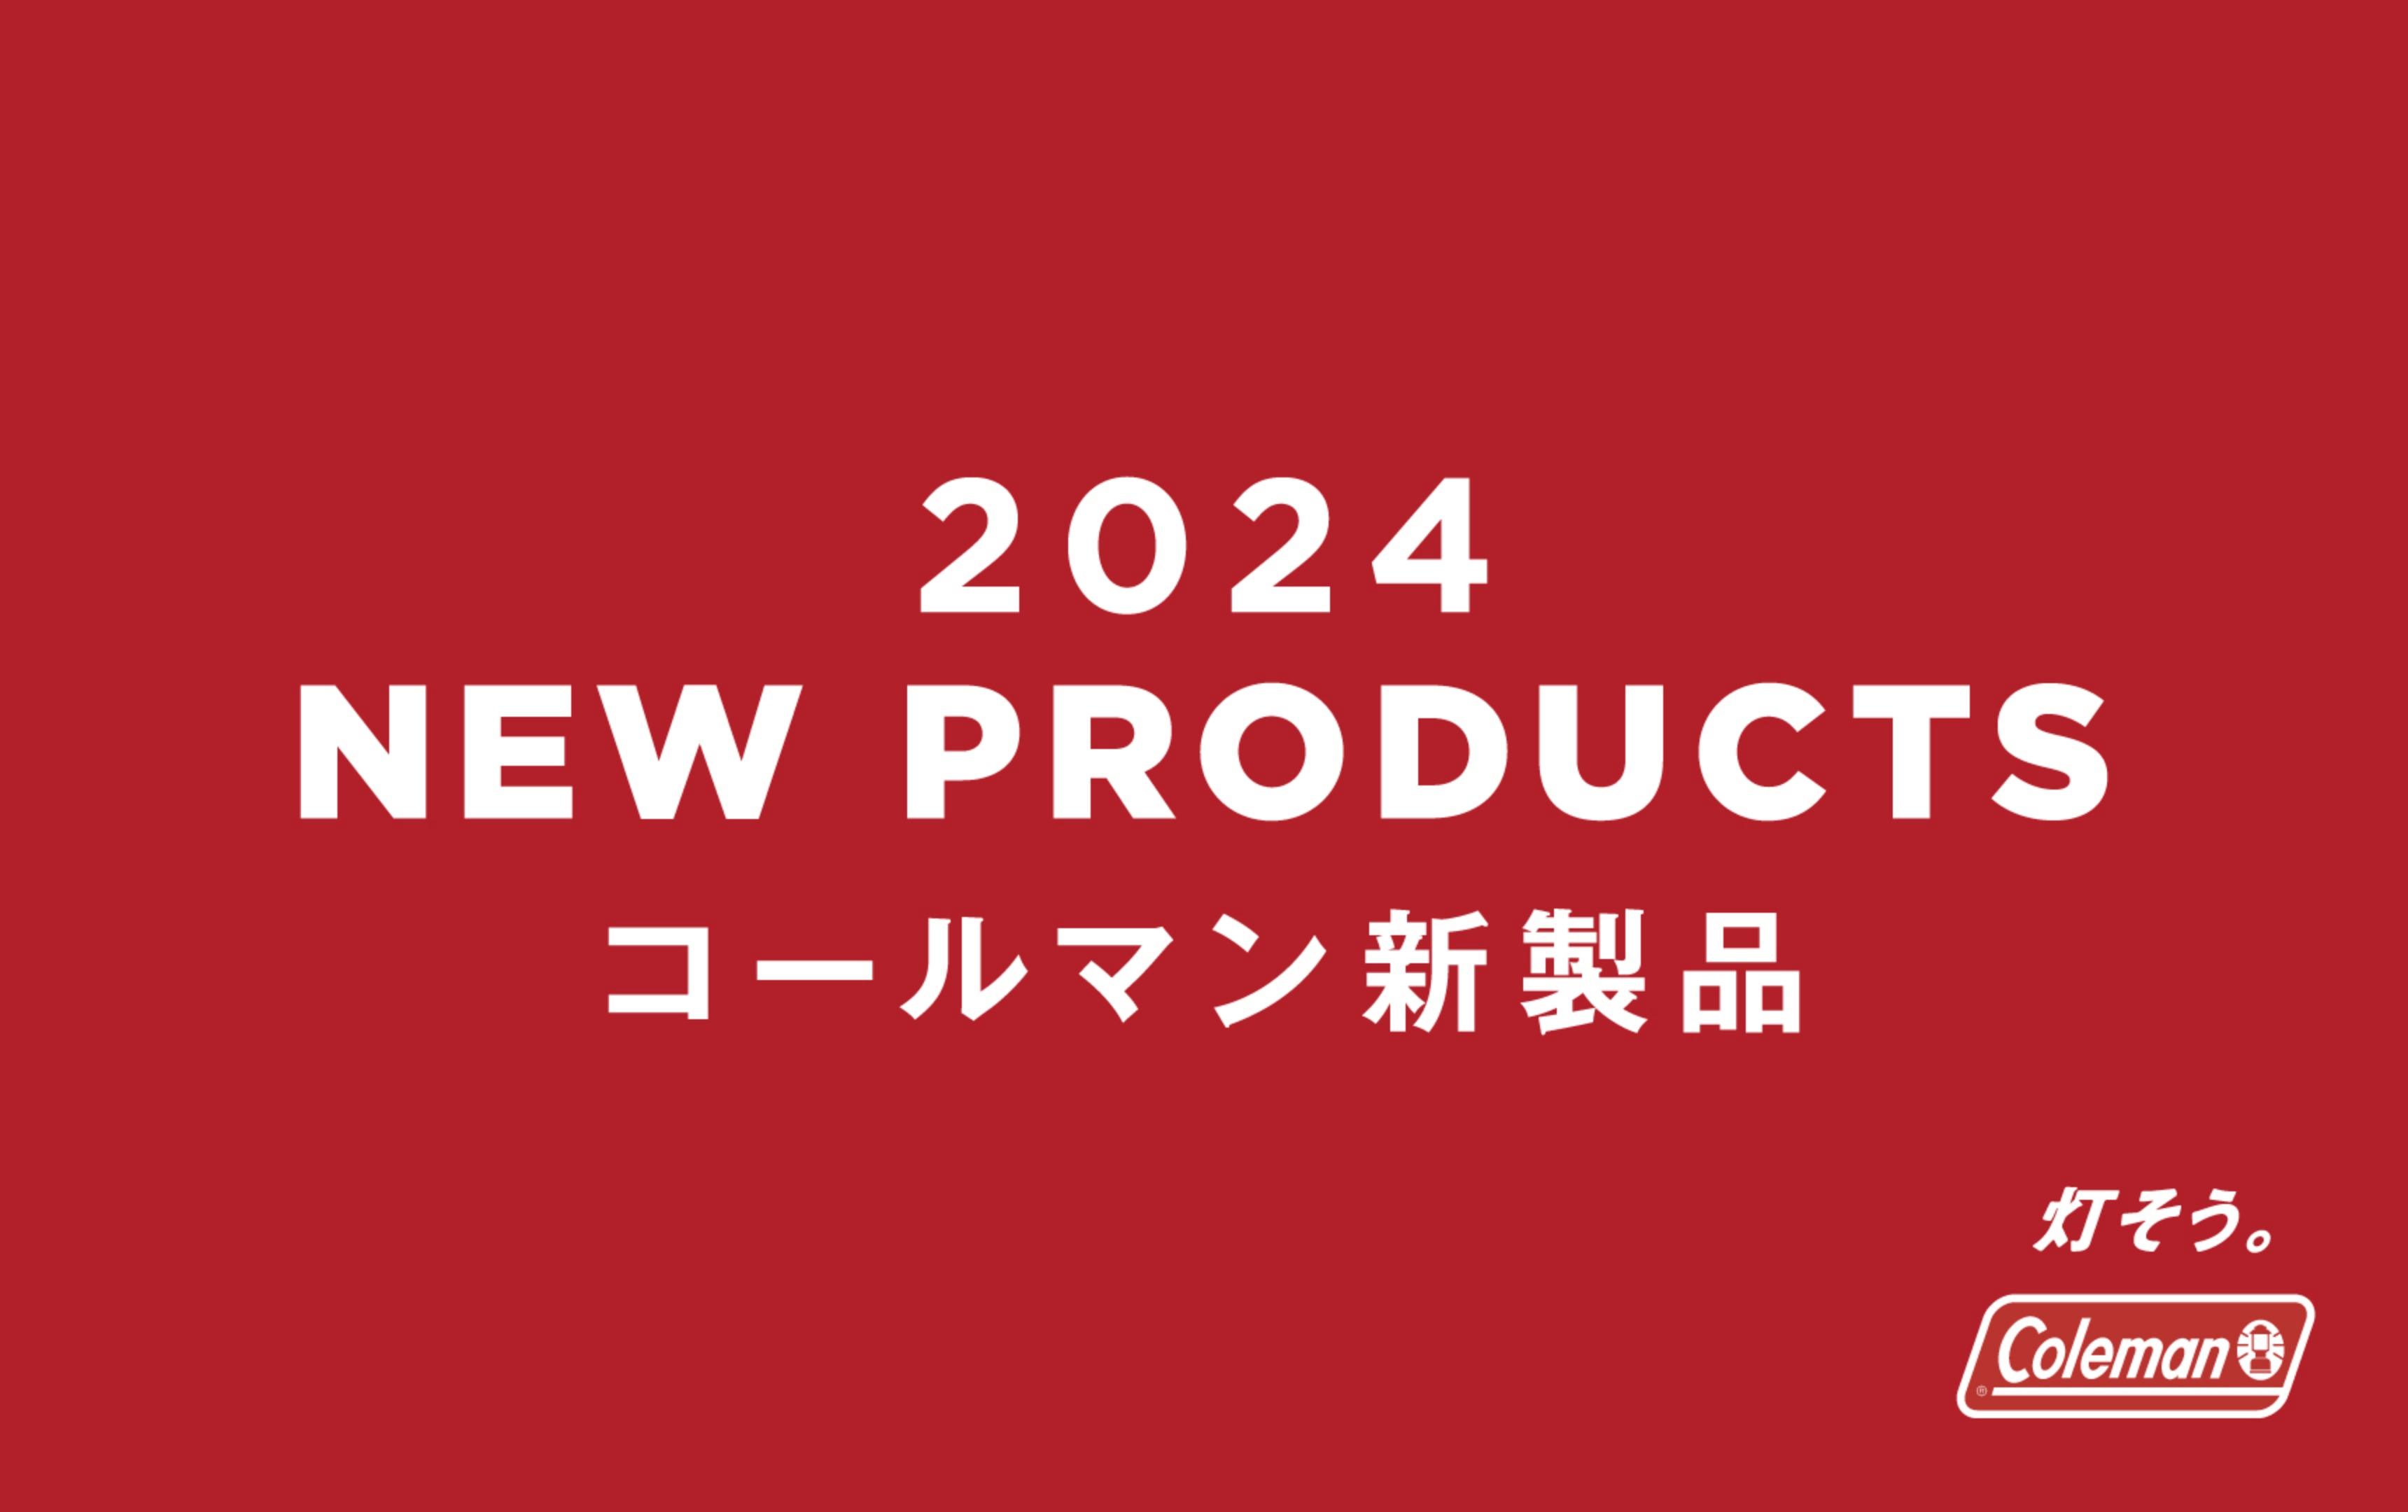 2024 NEW PRODUCTS コールマン新商品